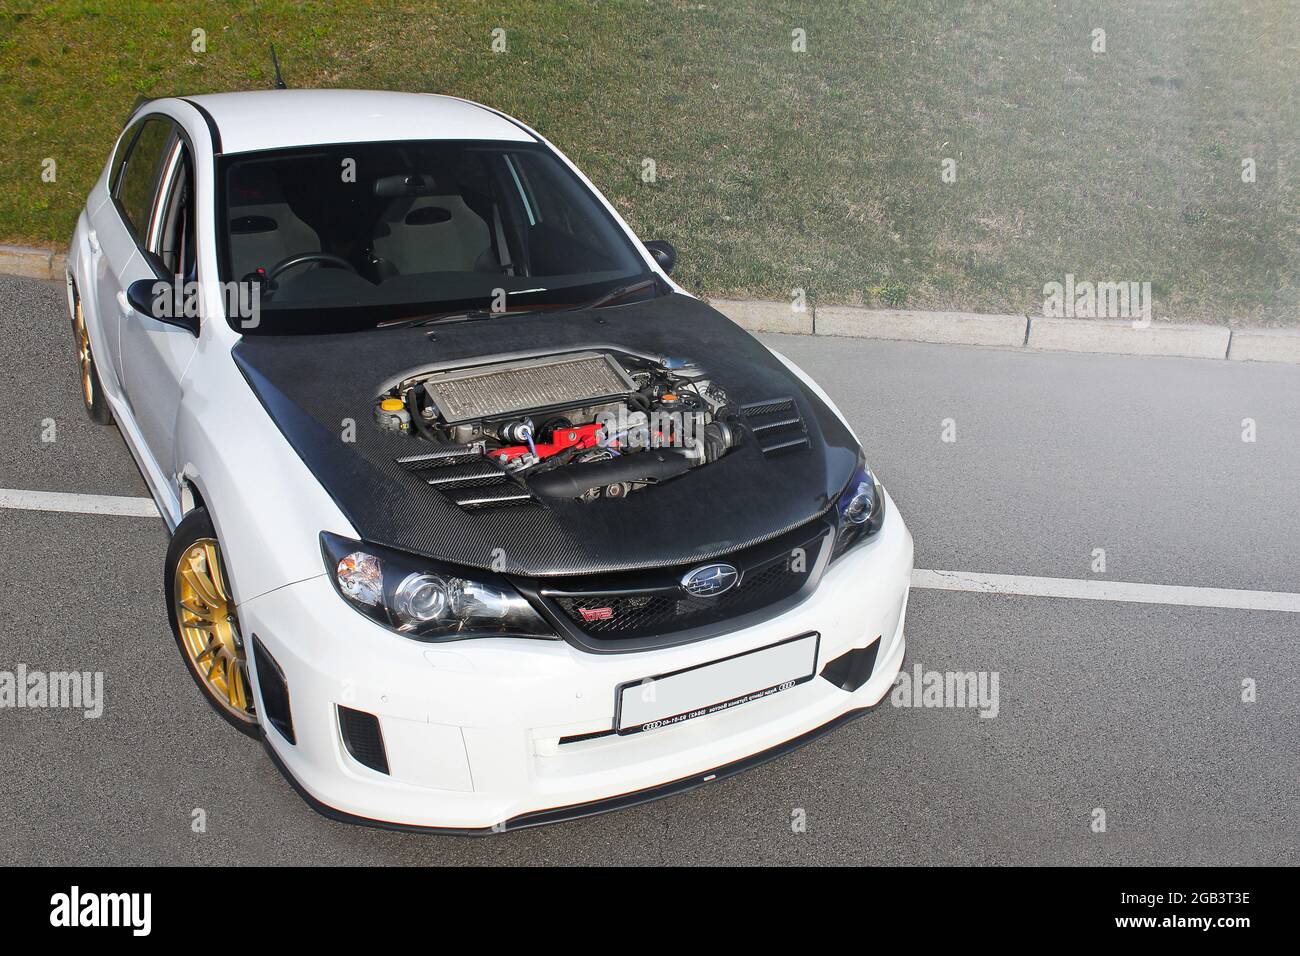 Kiev, Ukraine - March 25, 2015: Subaru Impreza WRX STI in the city. Japanese car. Subaru engine Stock Photo